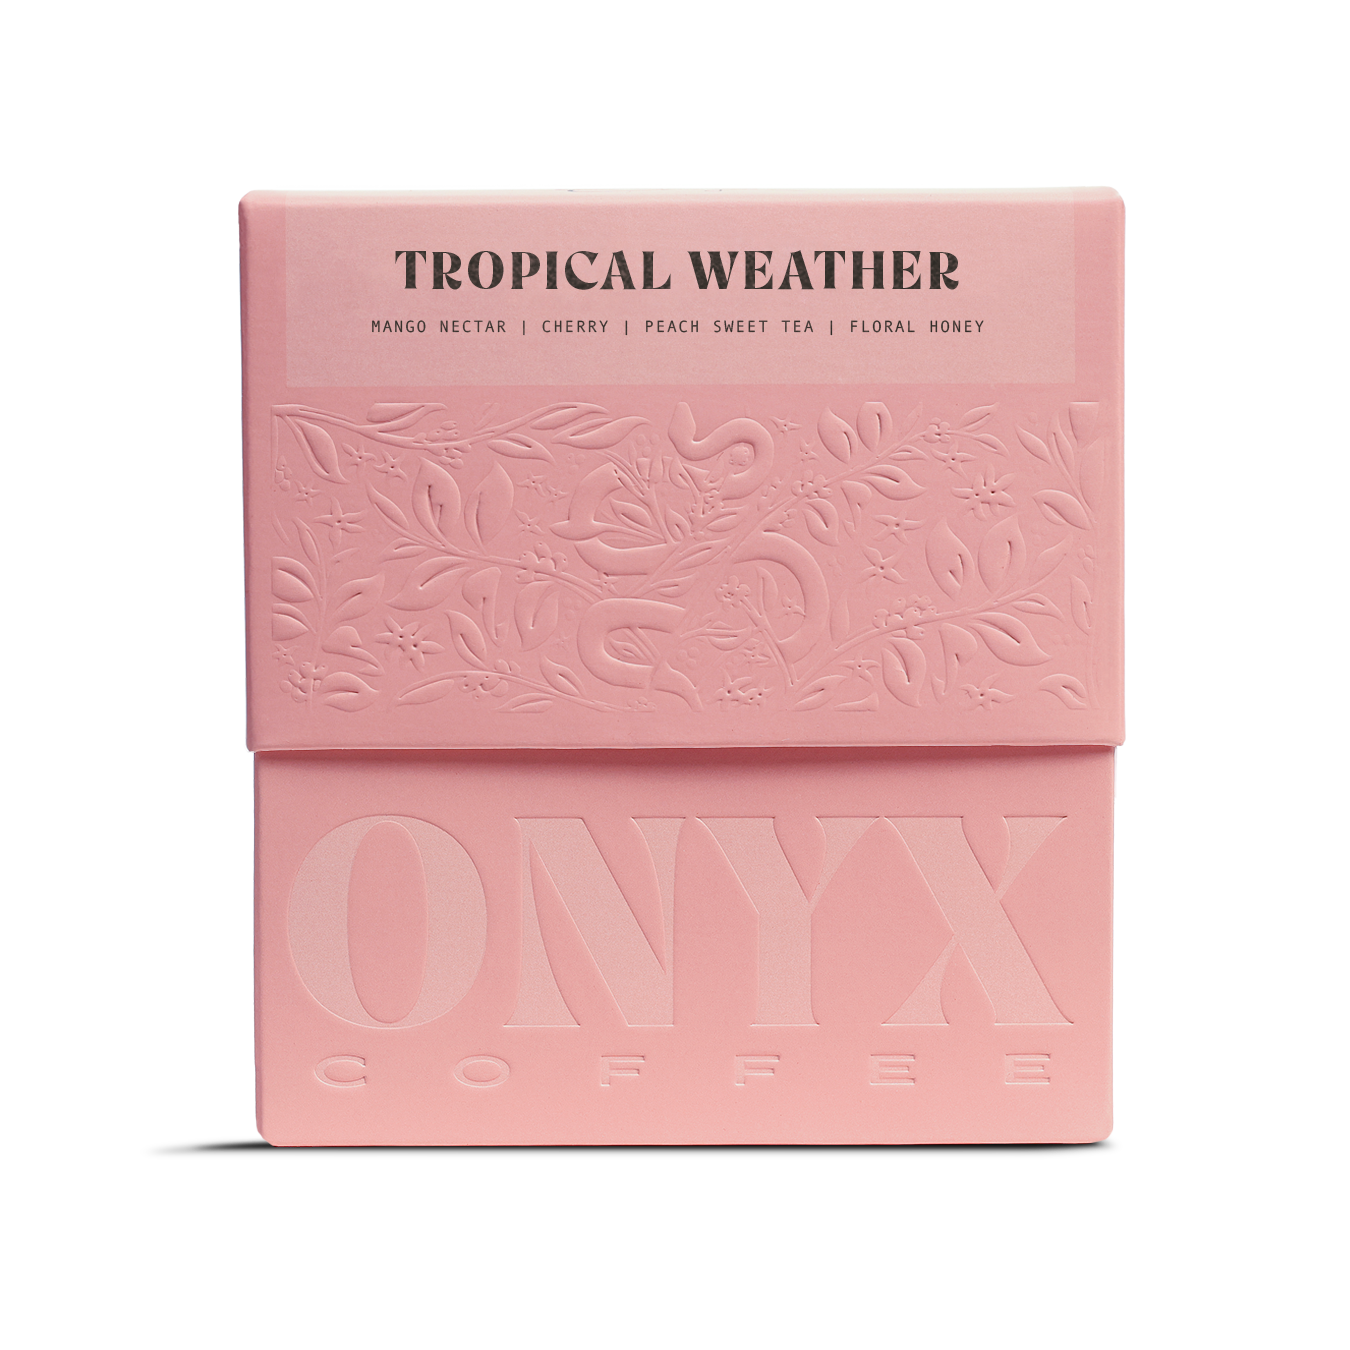 Tropical Weather by Onyx Coffee Lab